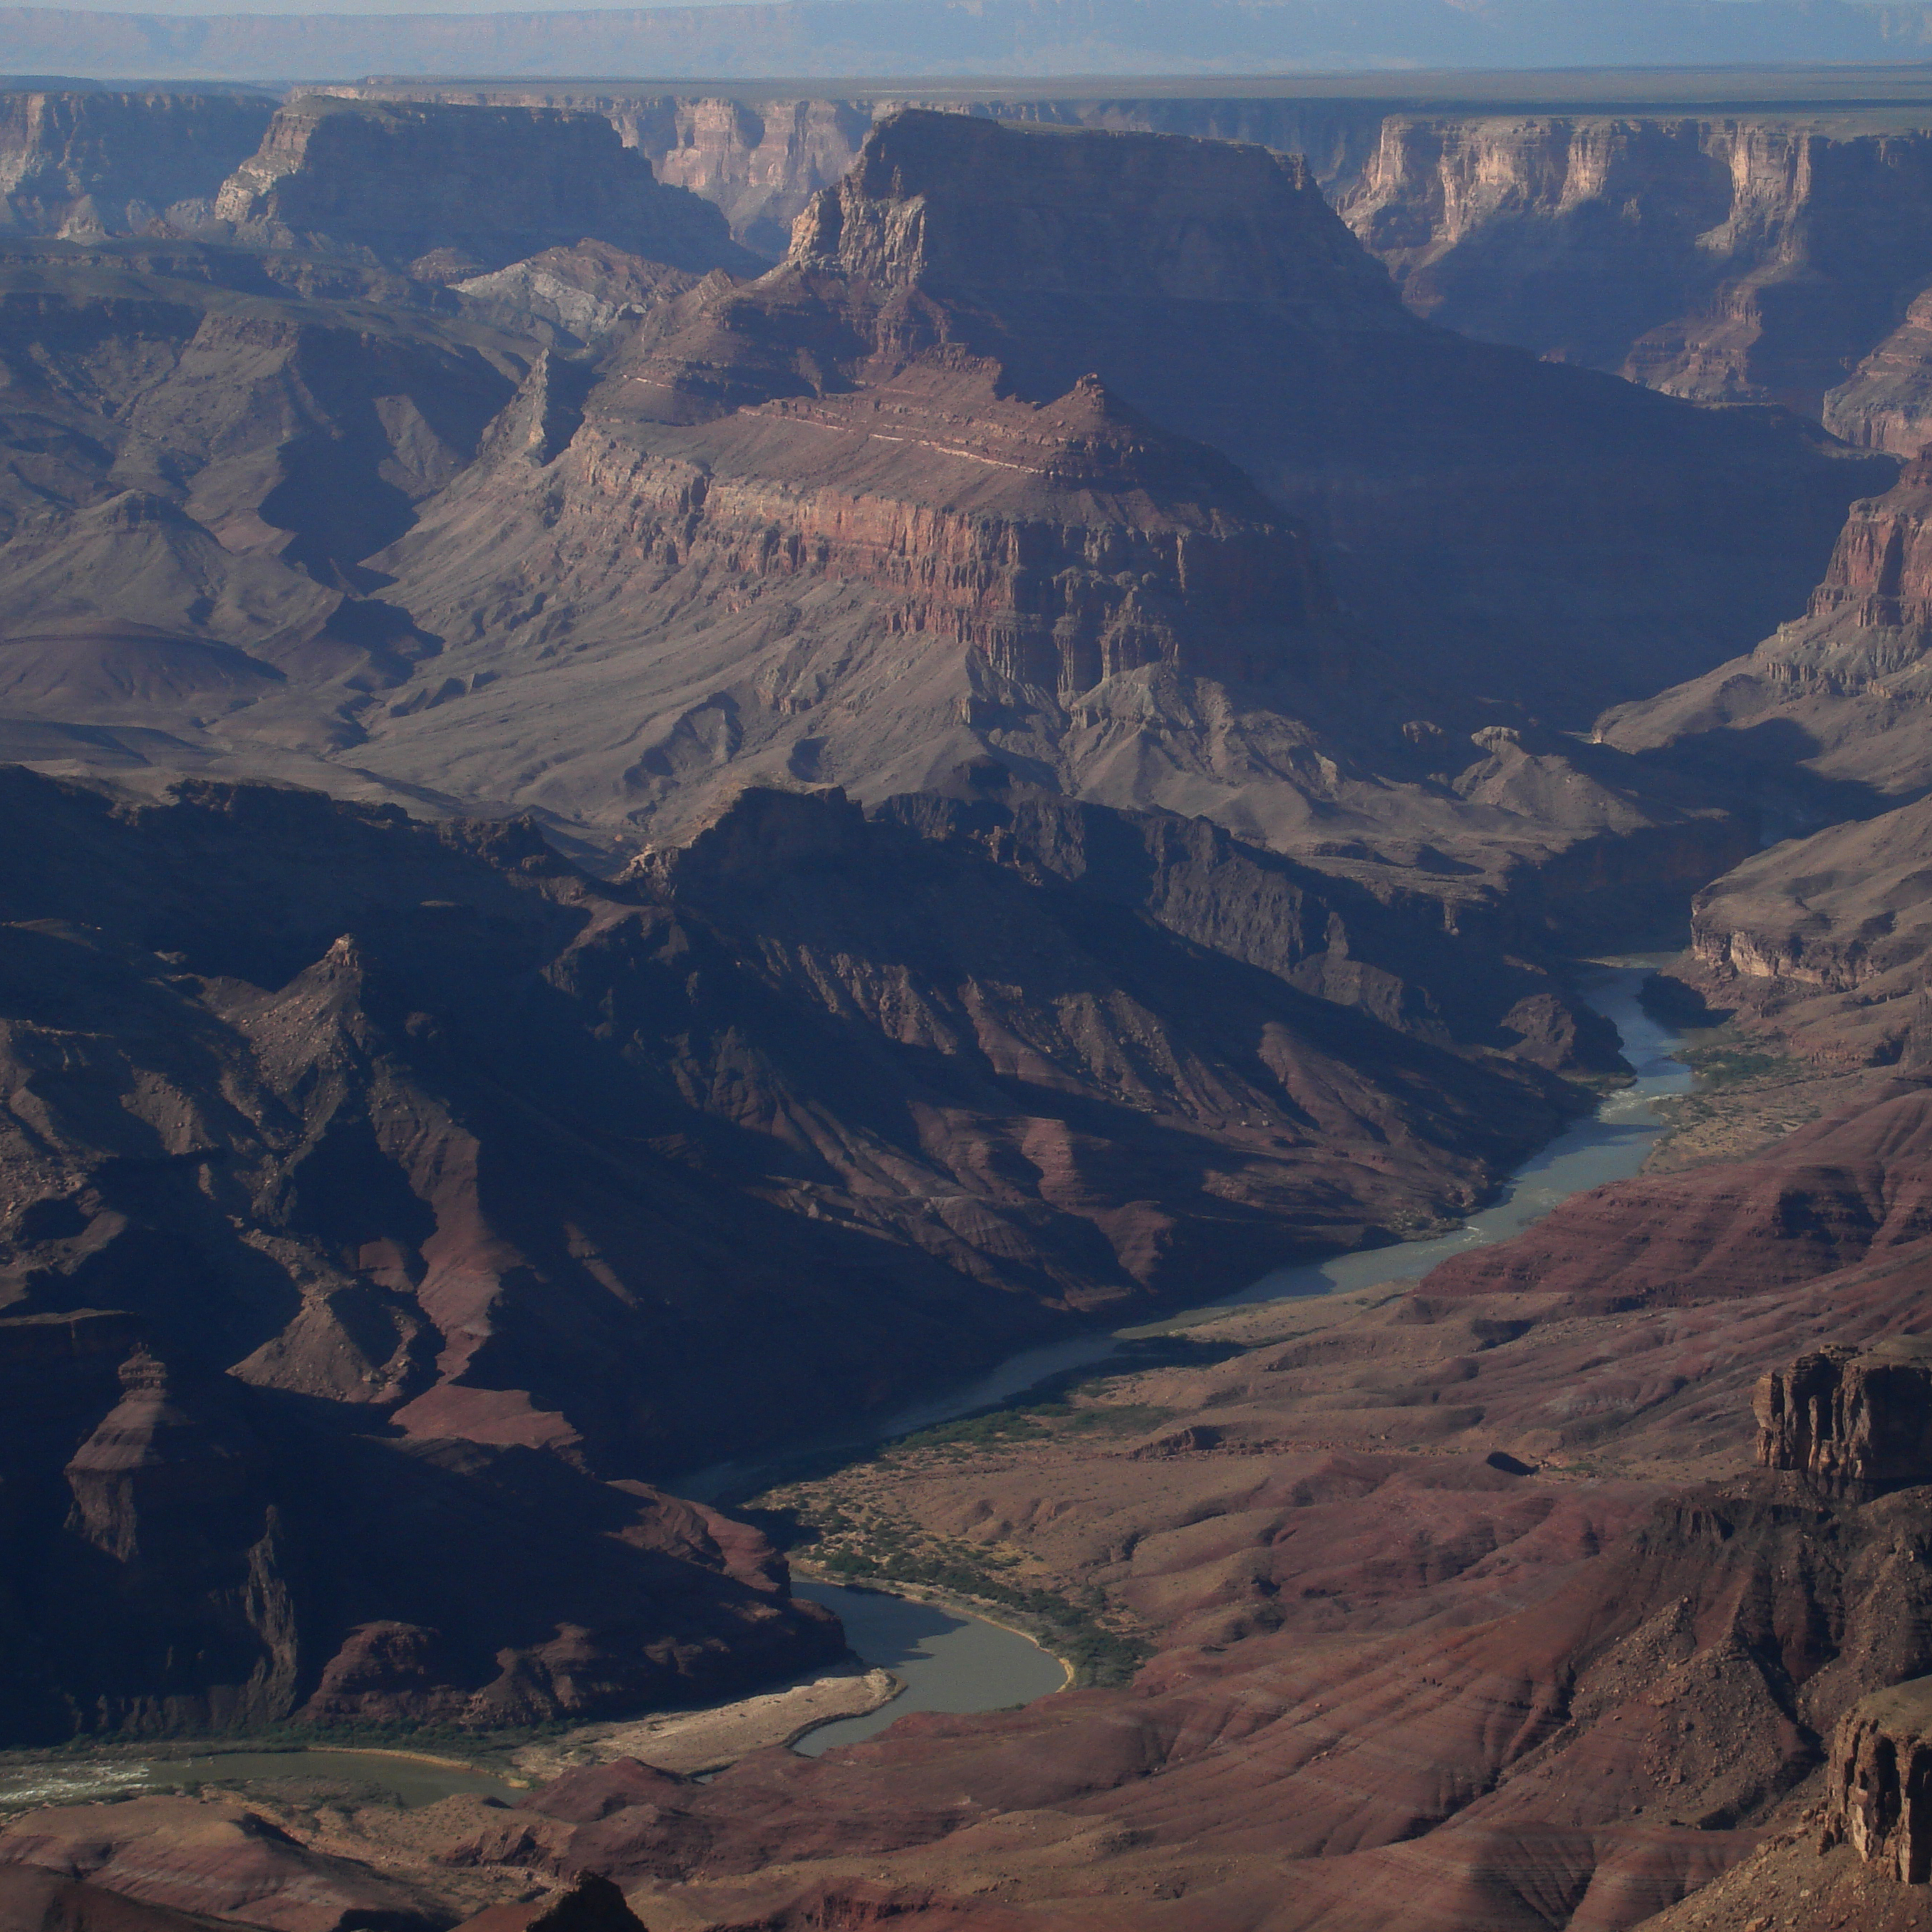 Colorado Rive in Grand Canyon